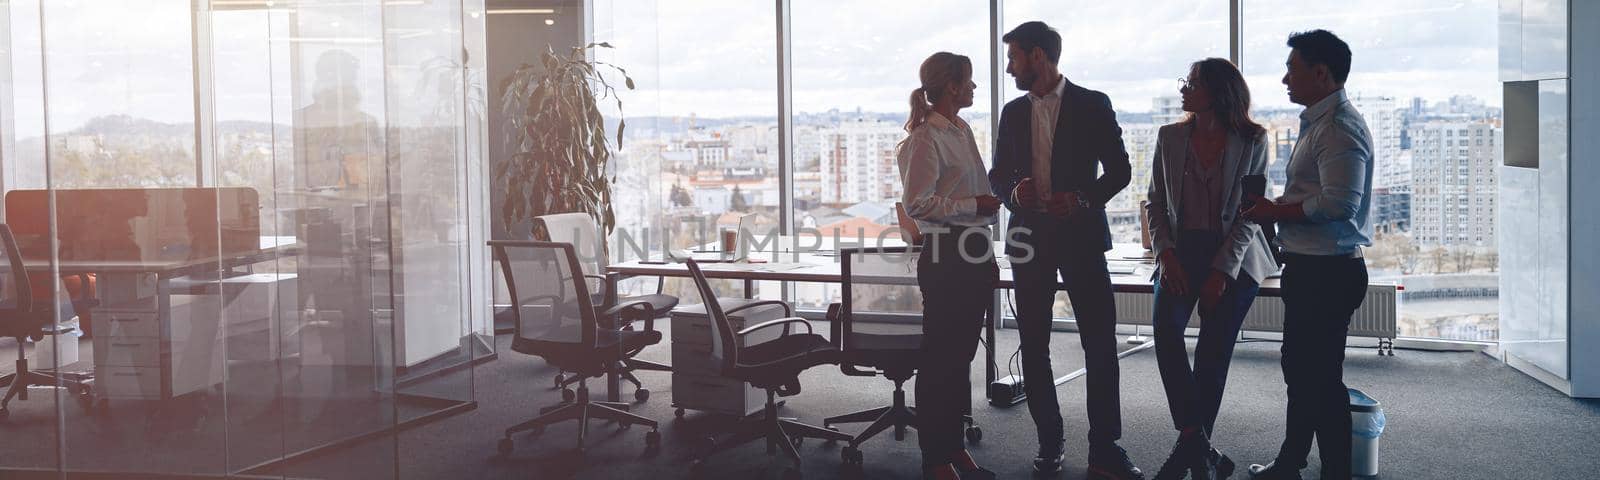 Business team standing against panoramic windows in modern office by Yaroslav_astakhov